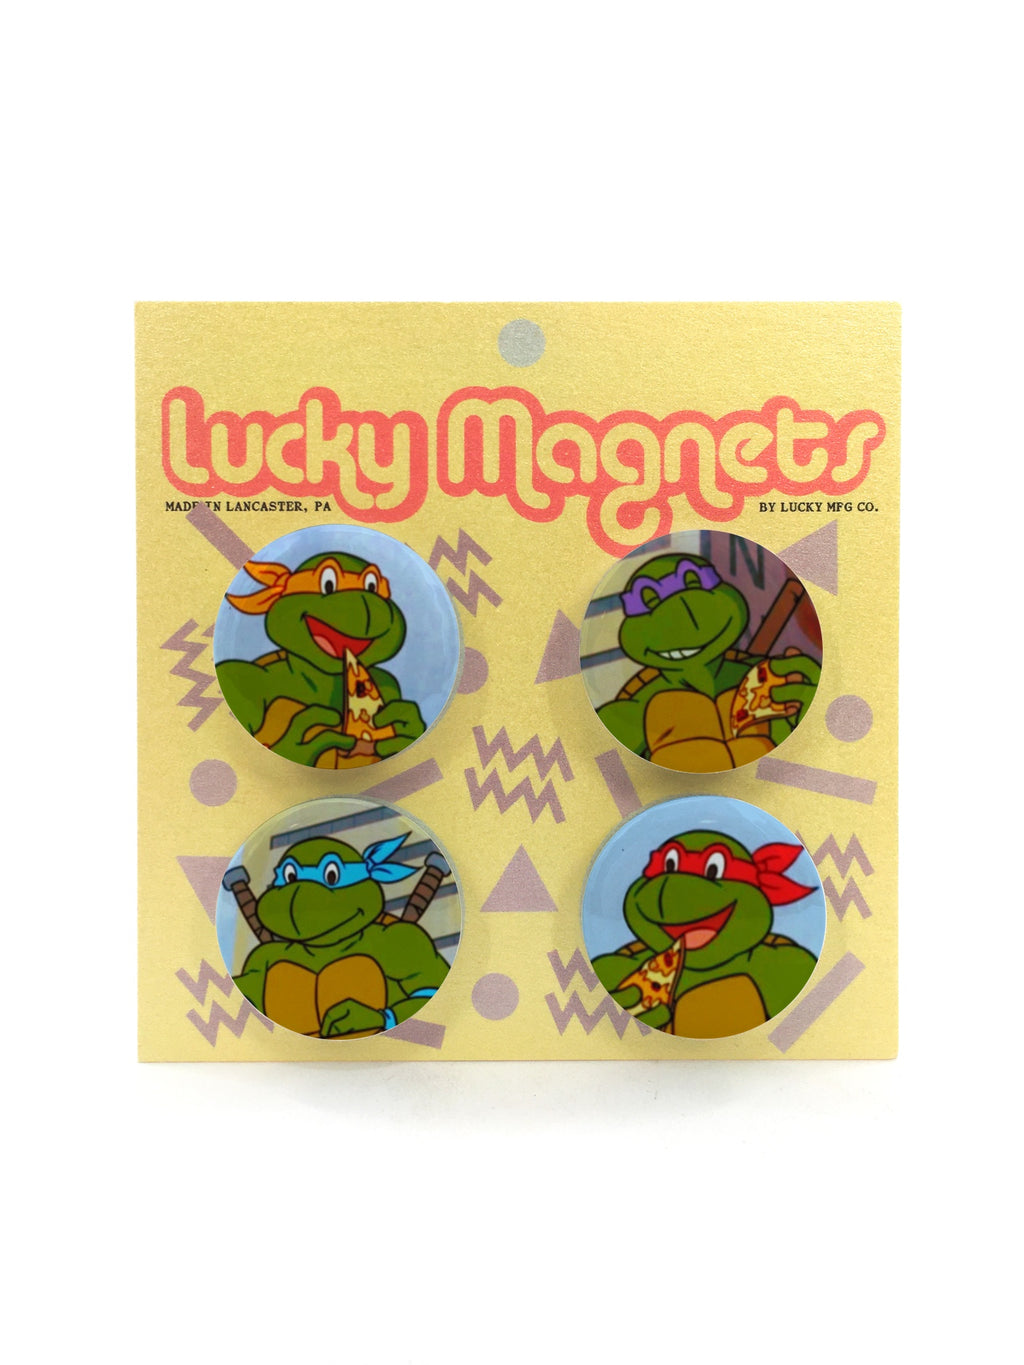 Teenage Mutant Ninja Turtles Button Magnets || Set of 4 || Cartoons || TV Show || Pop Culture